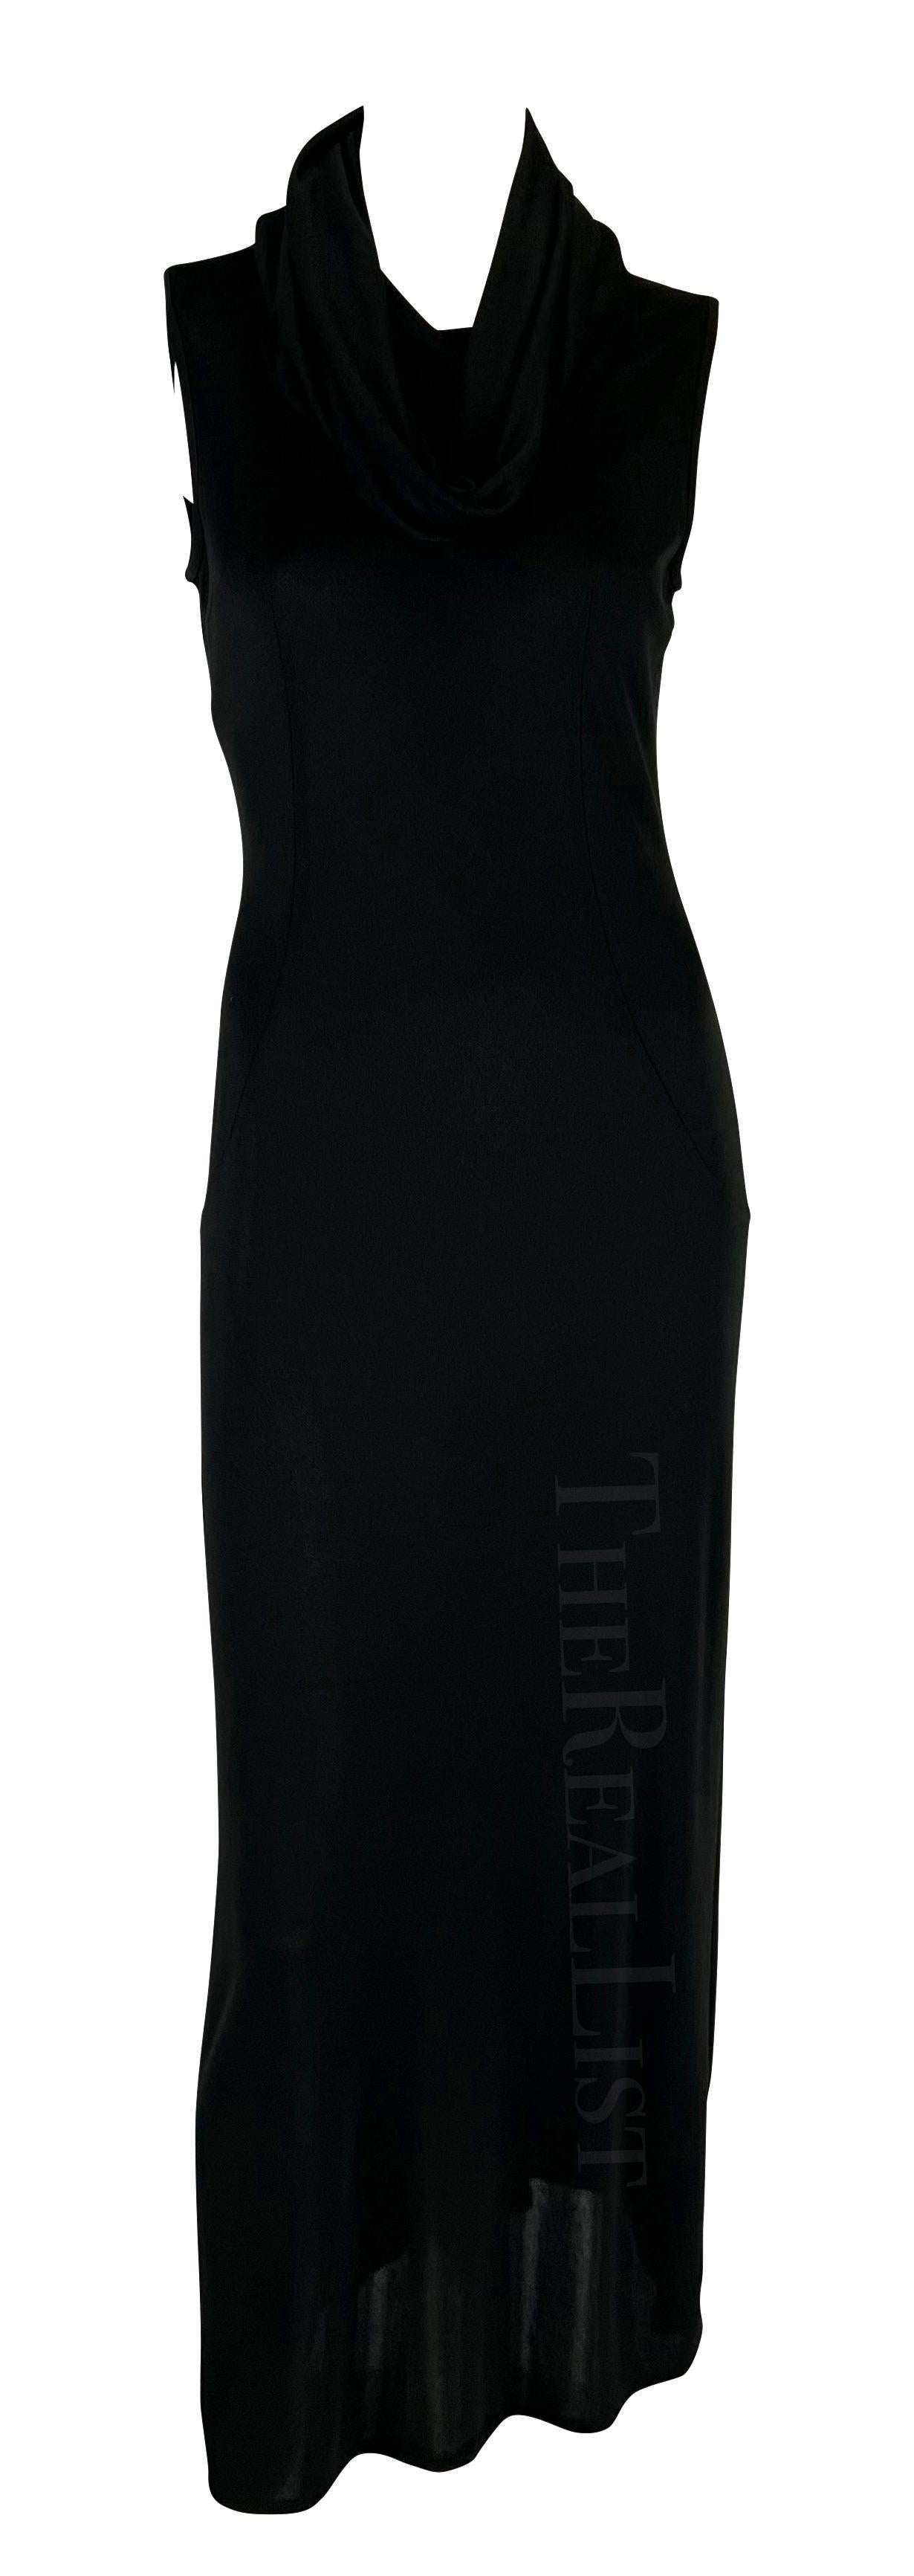 S/S 1996 Dolce & Gabbana Runway Hooded Stretch Black High Slit Dress For Sale 5